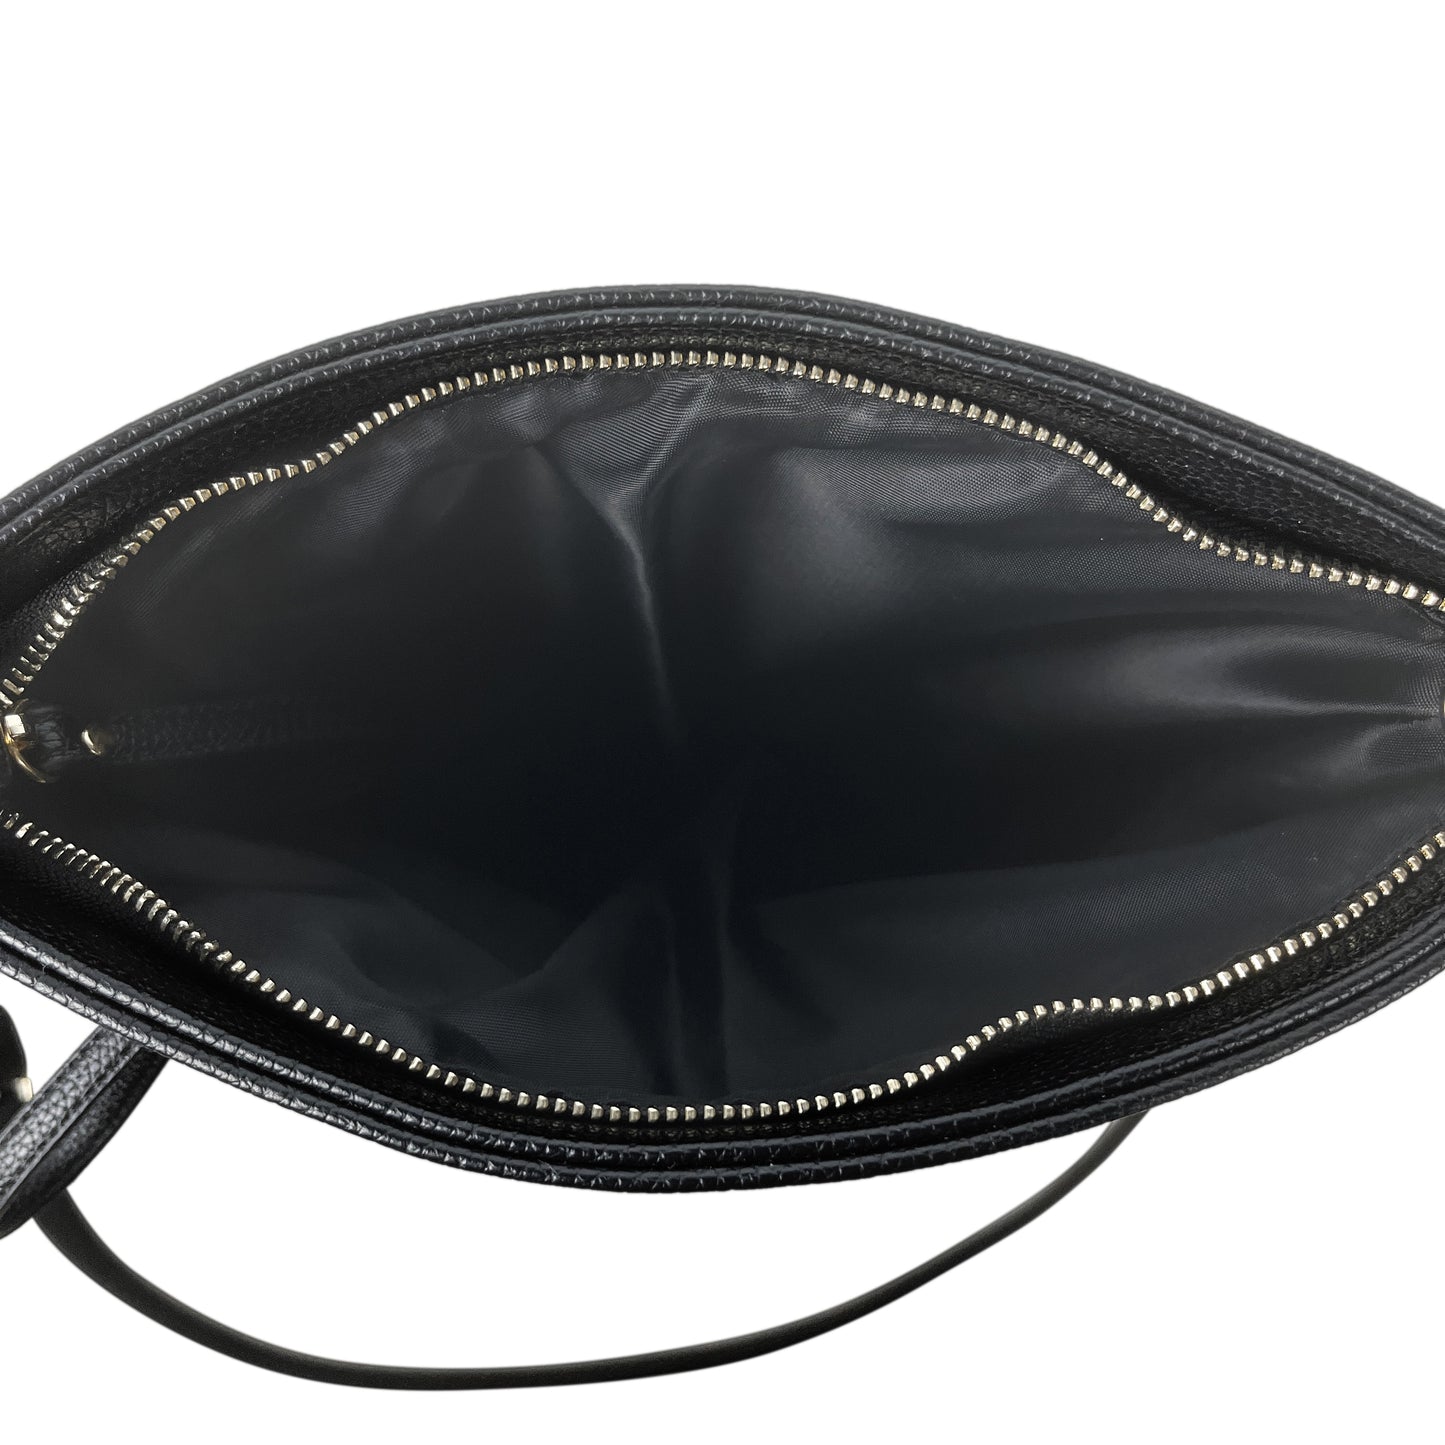 London Vegan Leather Convertible Crossbody or Laptop Bag - Black